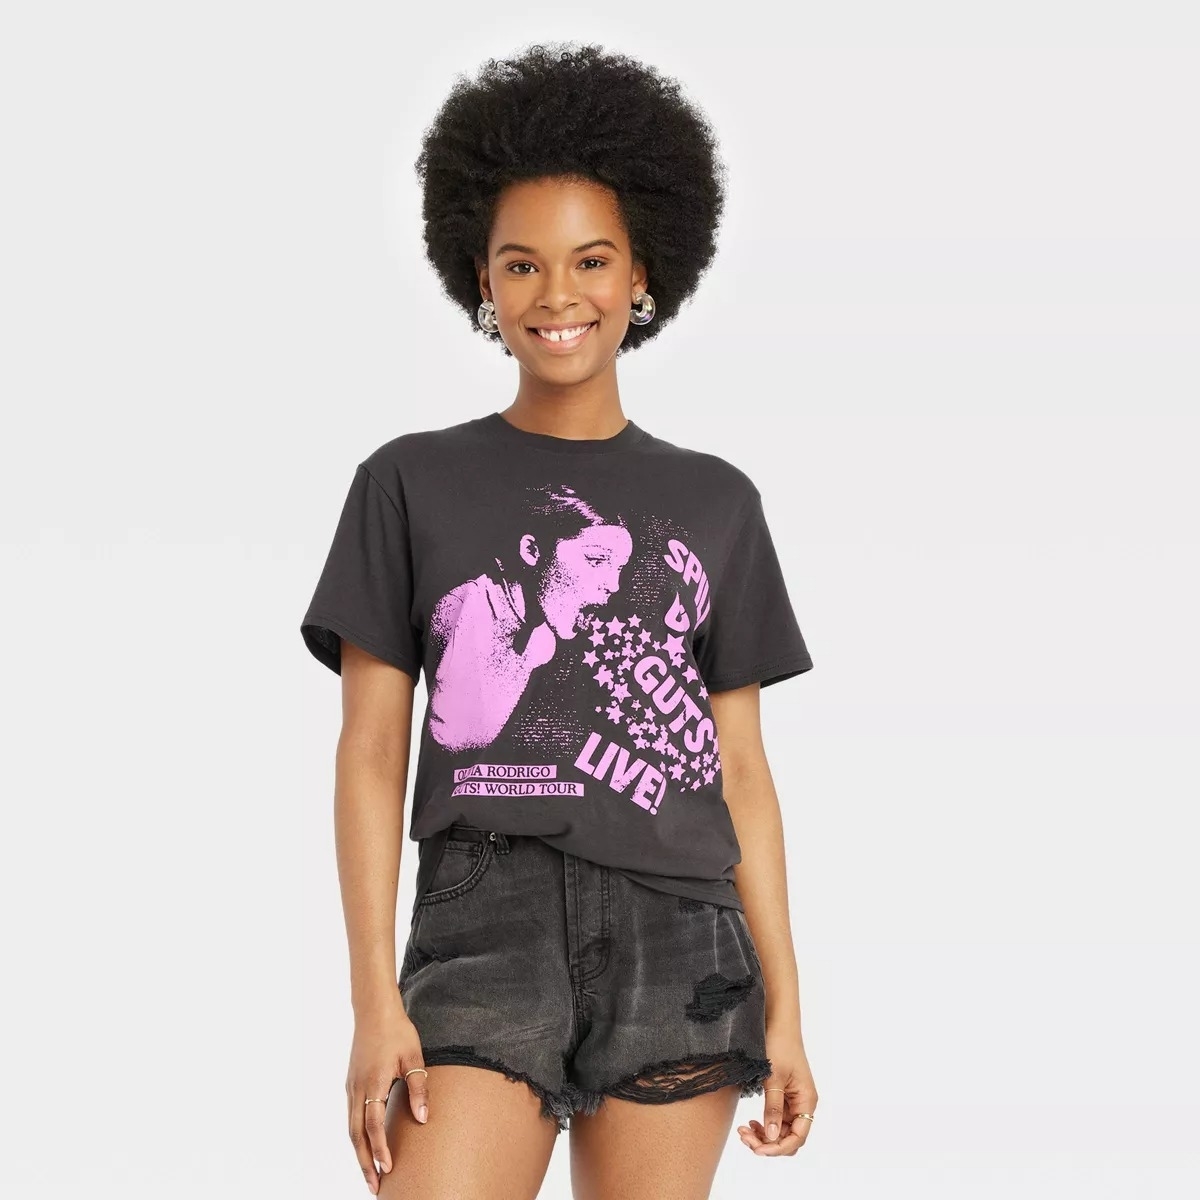 Model in a black Olivia Rodrigo t-shirt with pink illustration of Olivia on it